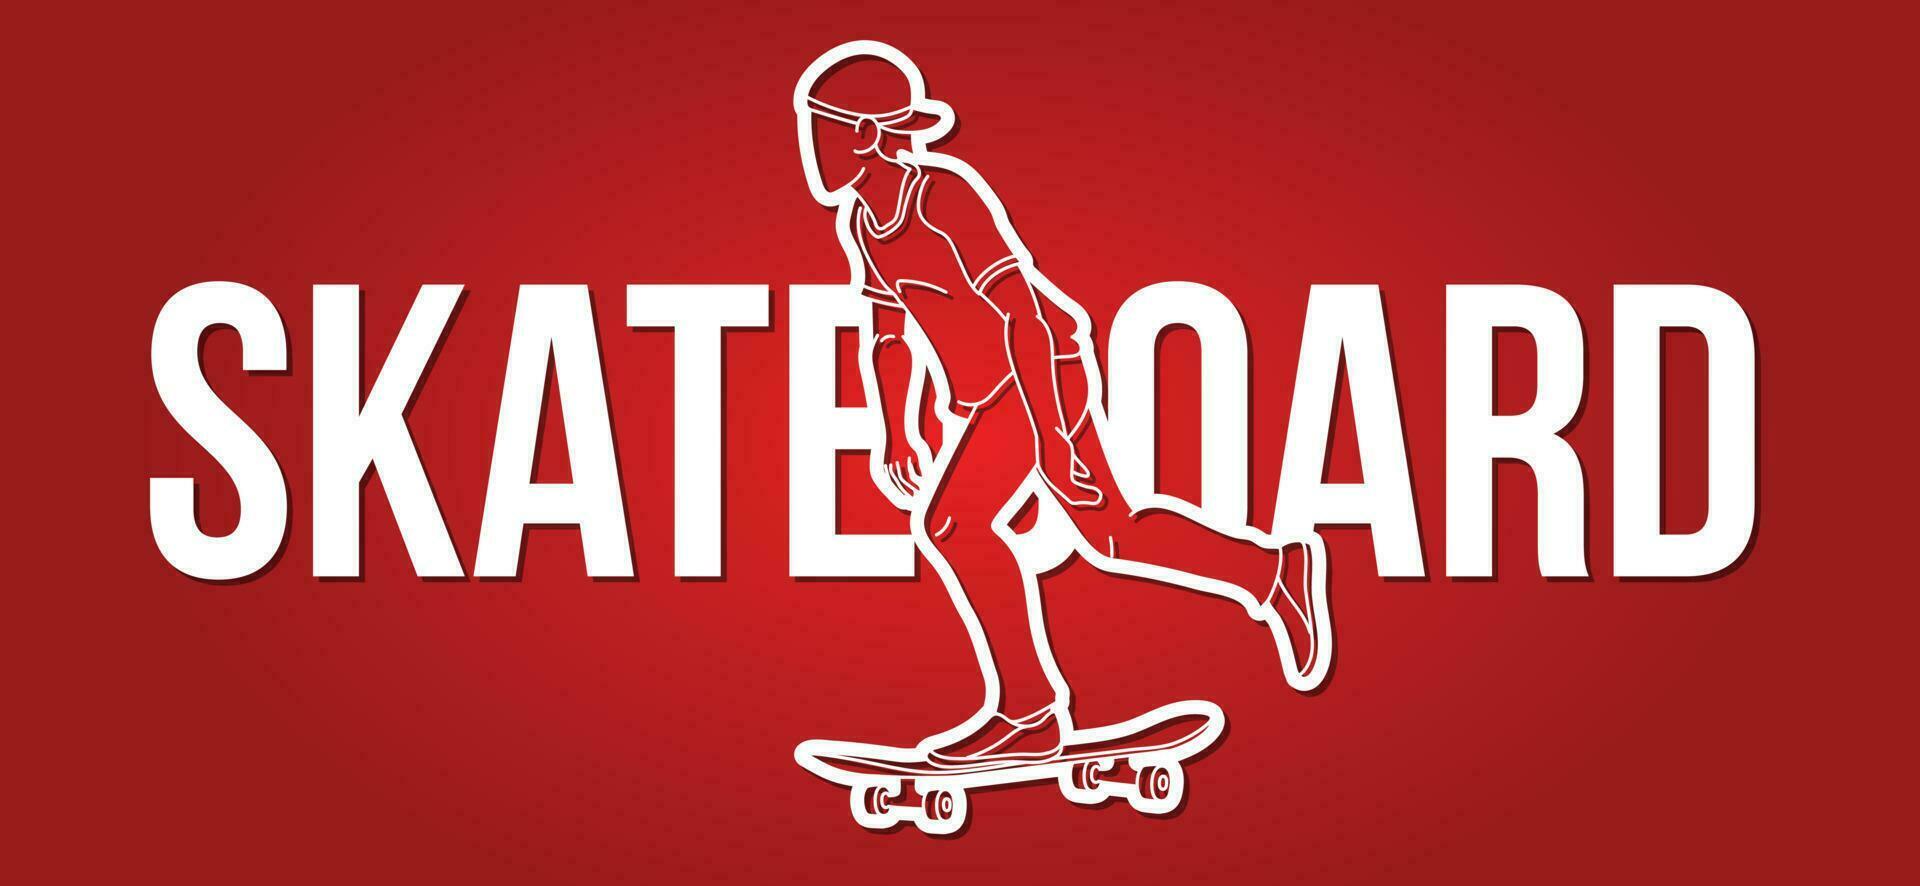 skateboard en skateboarder met tekst doopvont ontwerp tekenfilm grafisch vector